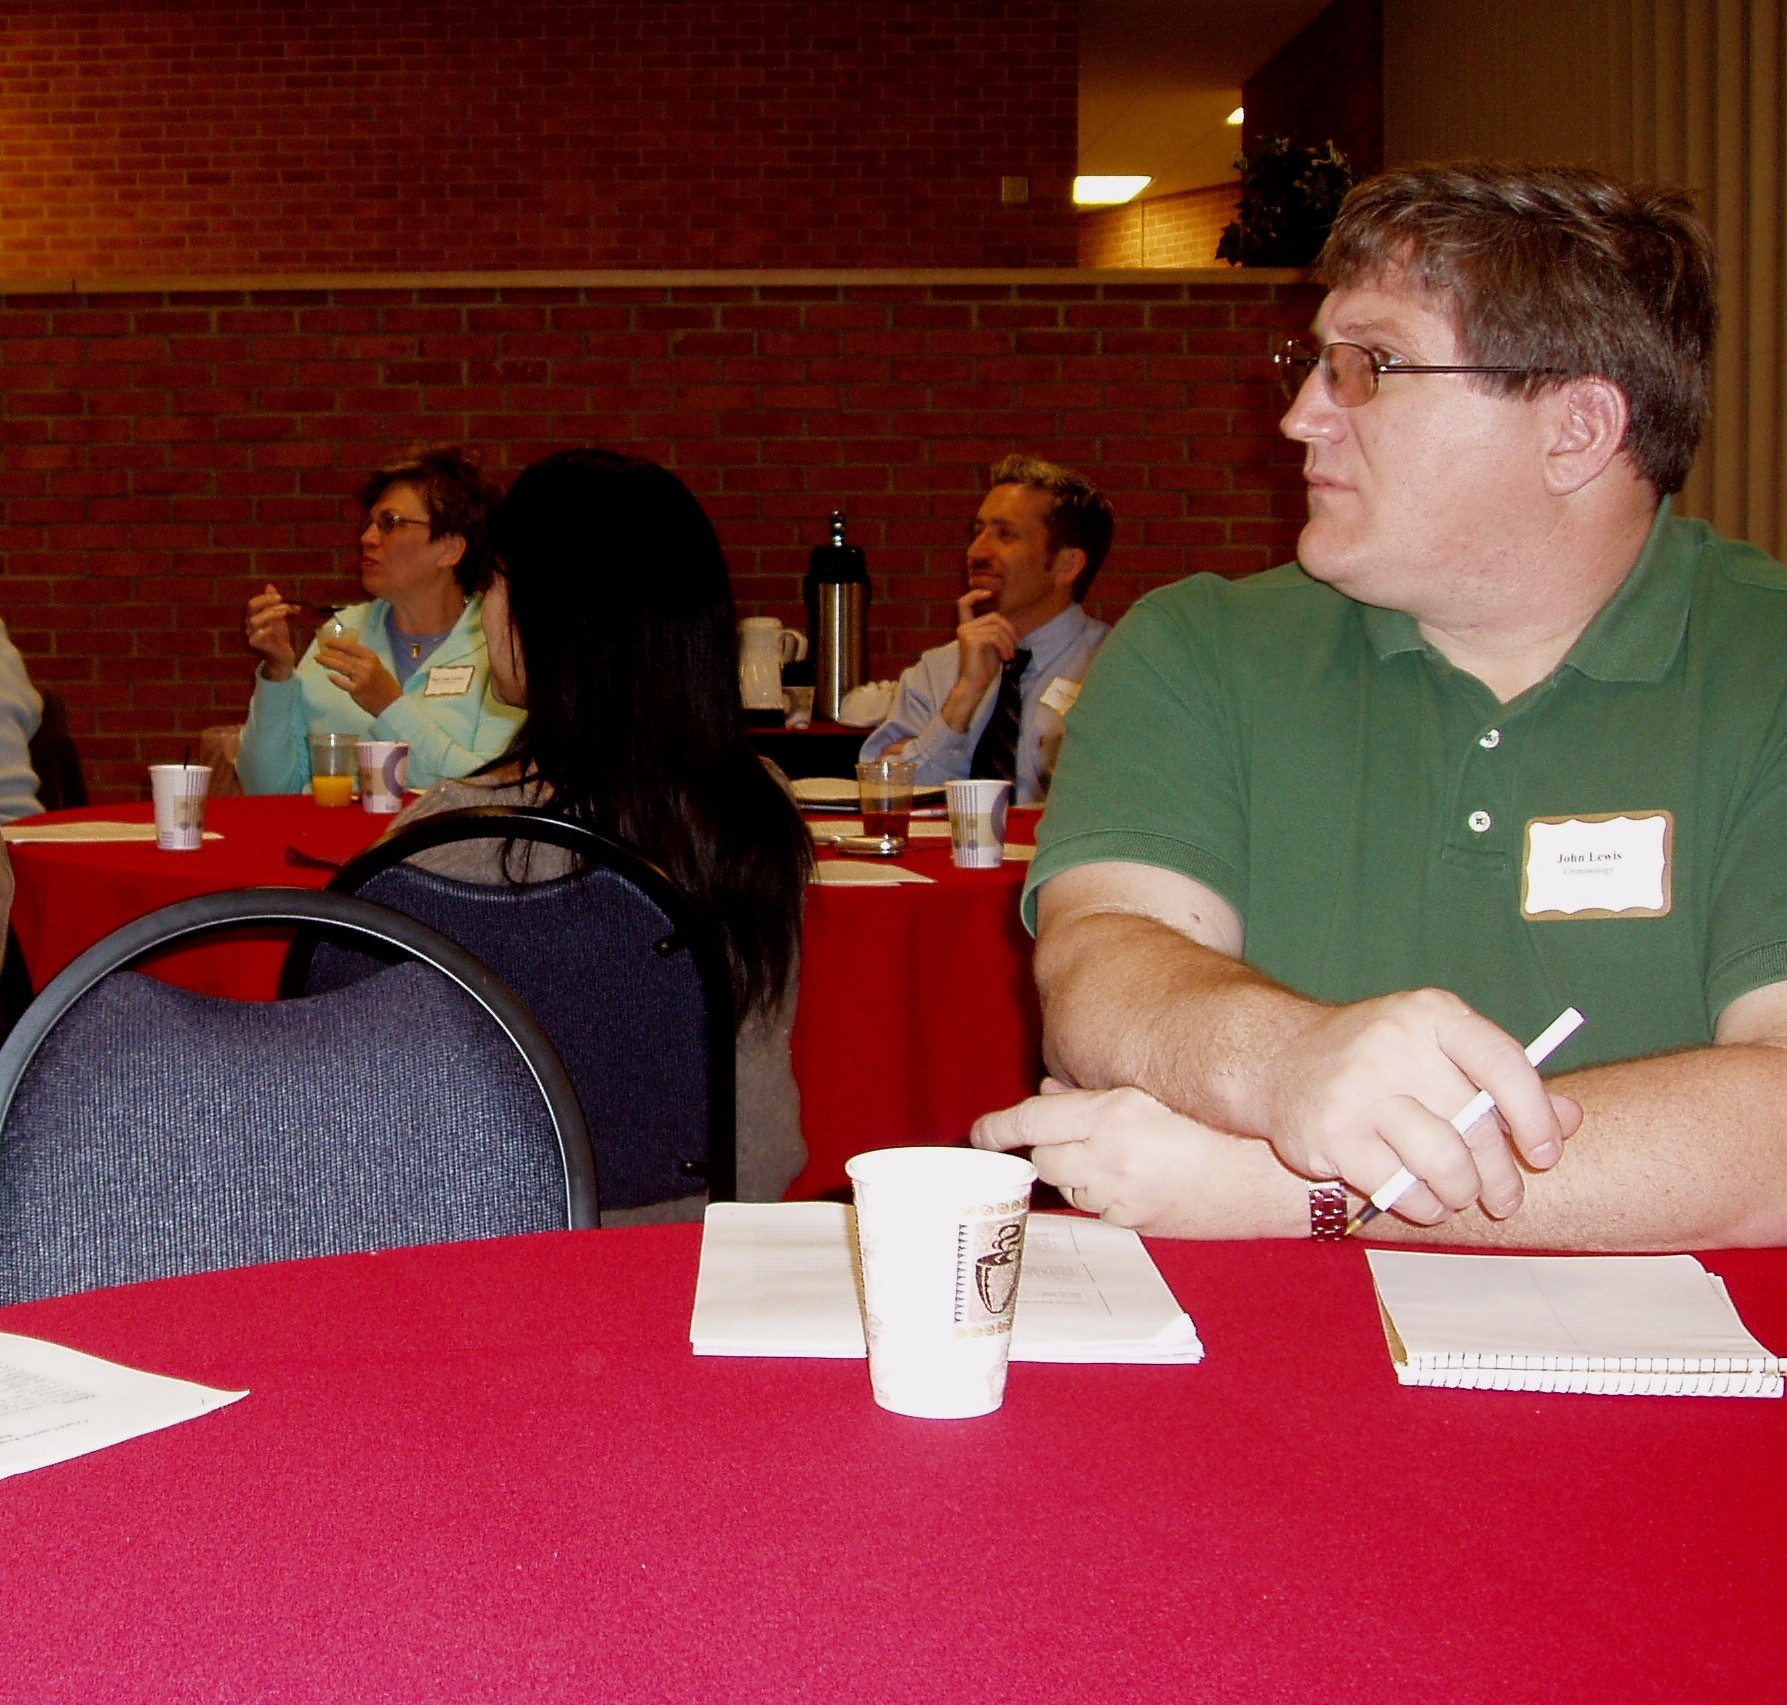 Participants in Classroom Civility Workshop